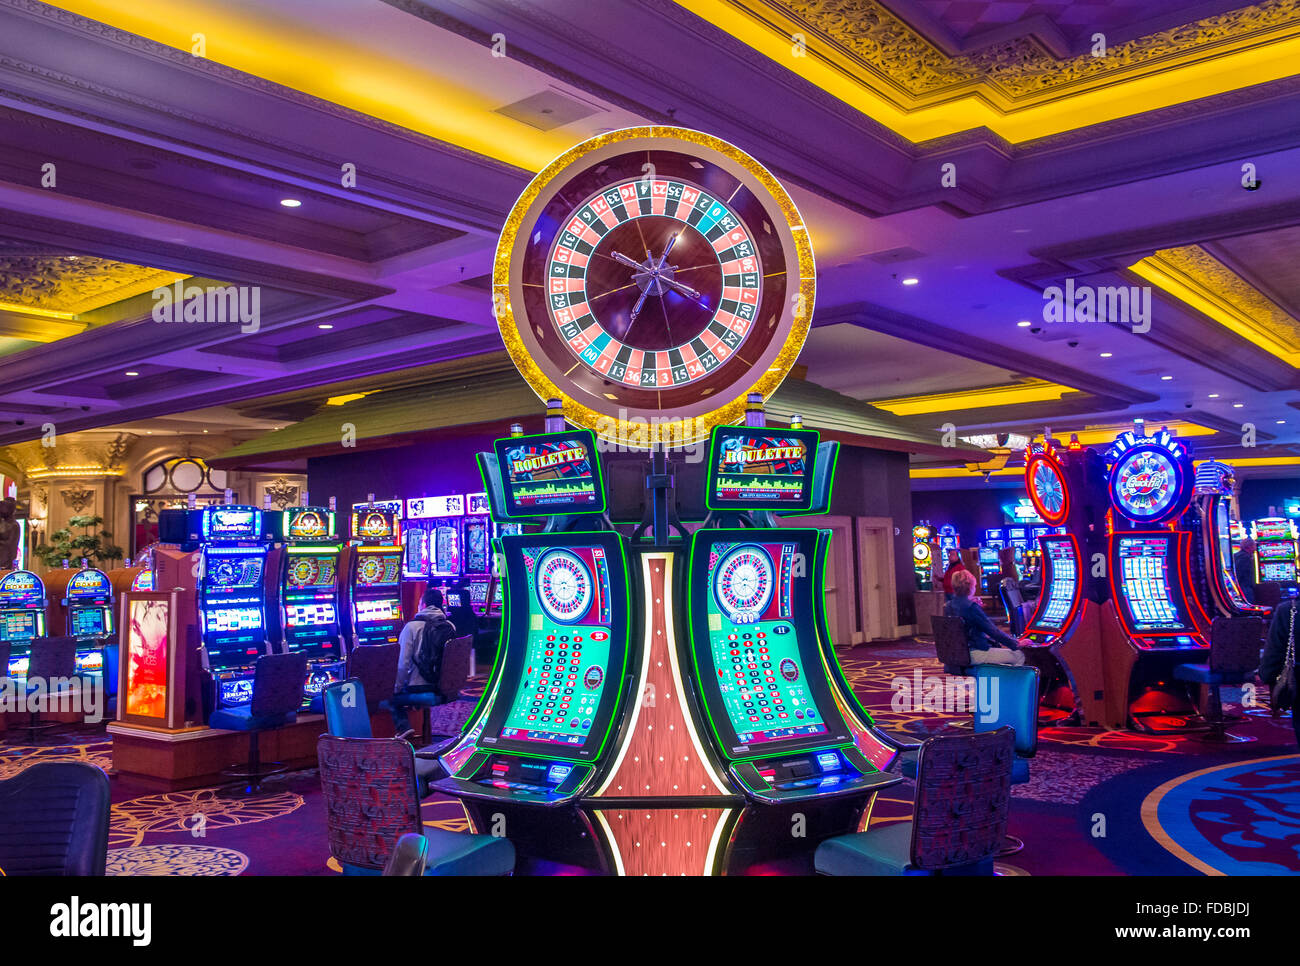 The interior of Mandalay Bay resort in Las Vegas Stock Photo - Alamy